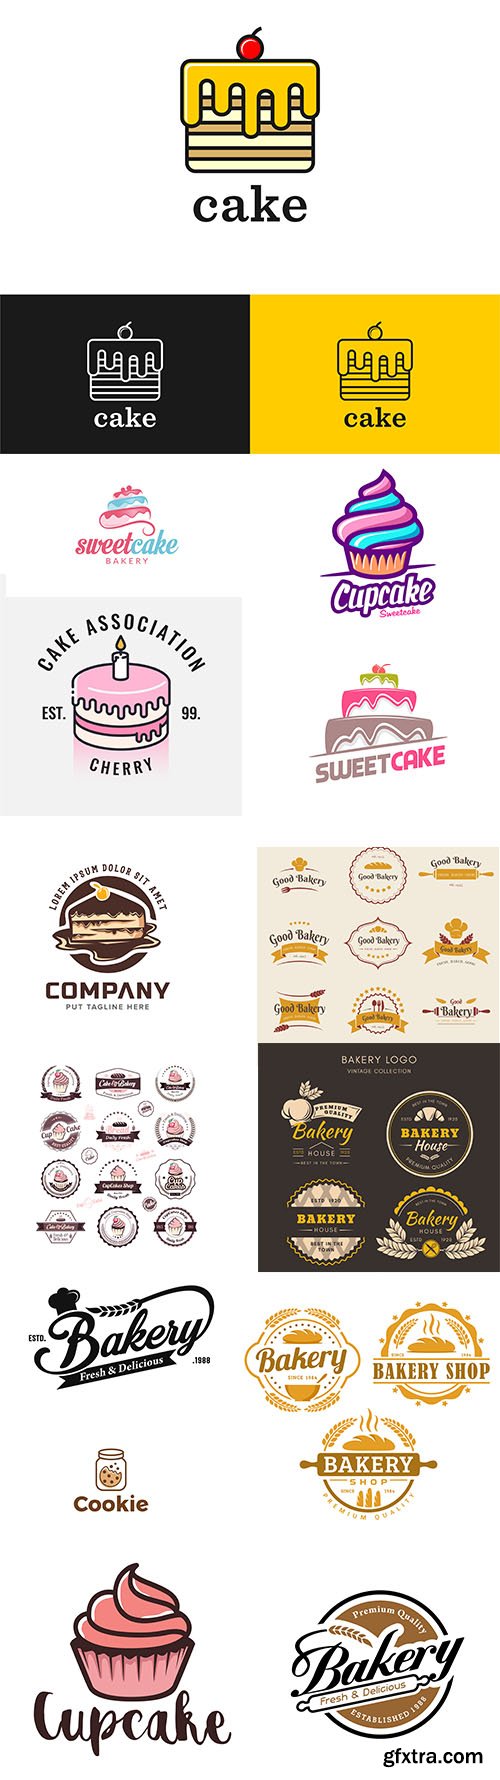 Bakery cake logo template collection vol 2